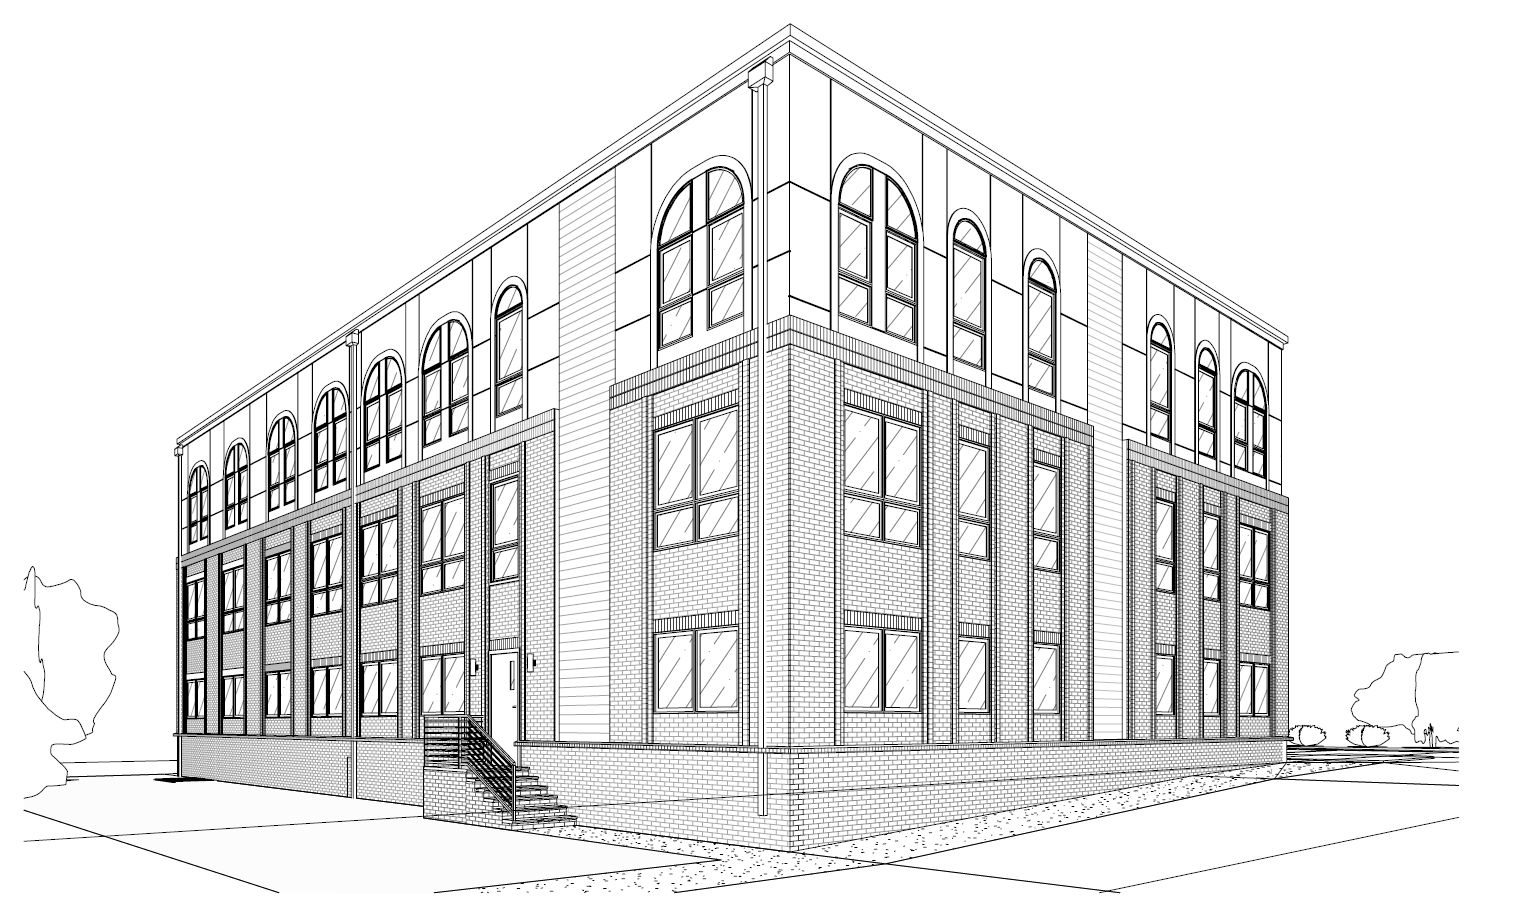 3120 North Park Avenue. Building axonometric. Credit: Designblendz via the City of Philadelphia